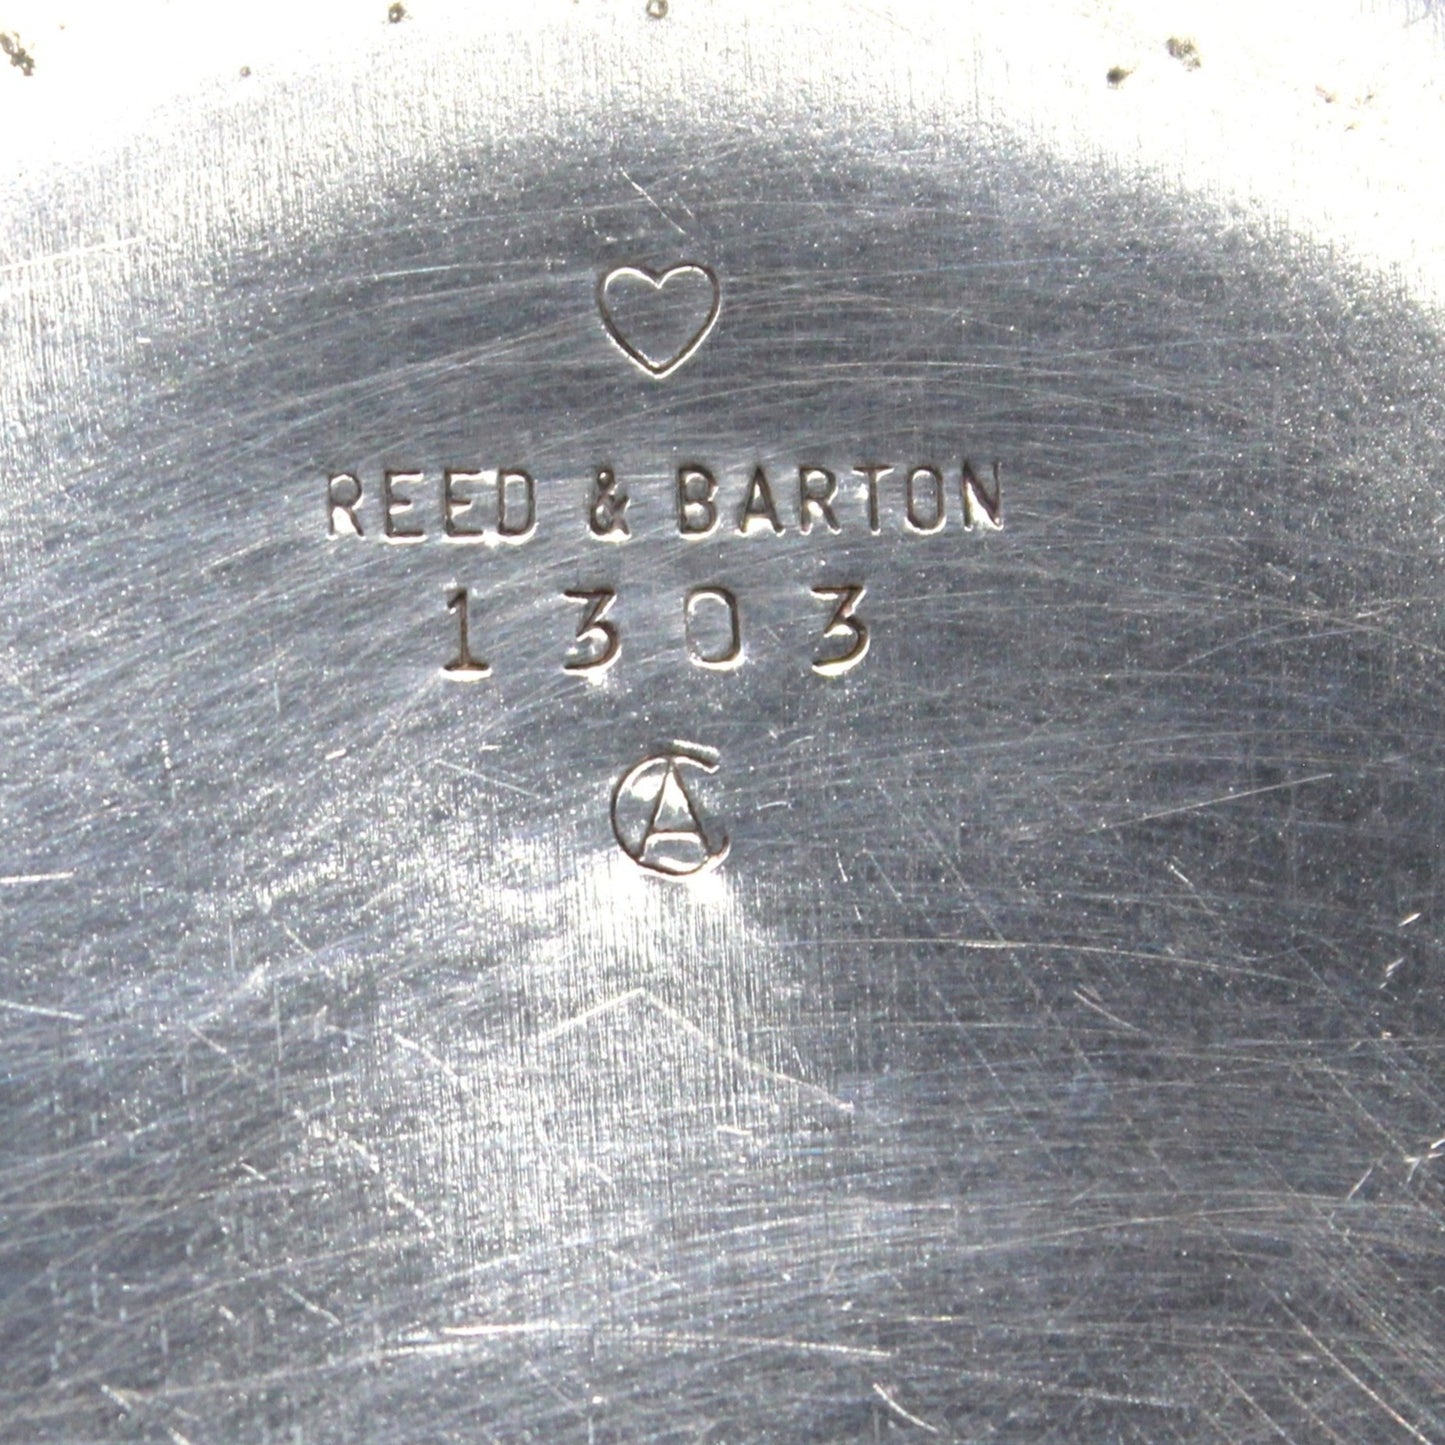 Bon Bon Dish, Reed & Barton, Ornate Candy Dish 1303, Silverplate, Vintage